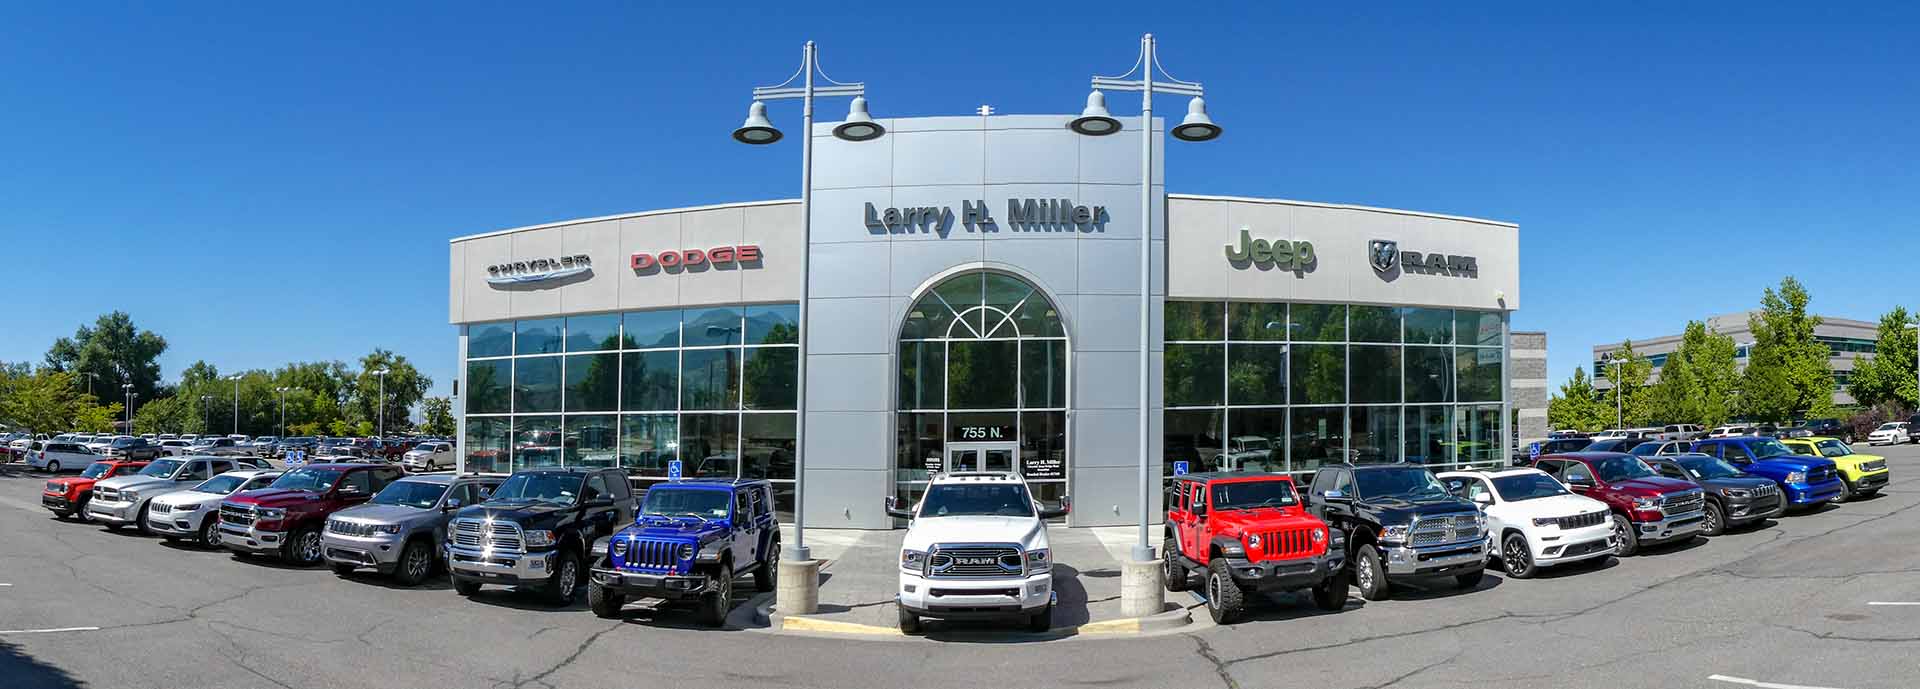 Larry H. Miller Chrysler Jeep Dodge Ram Bountiful